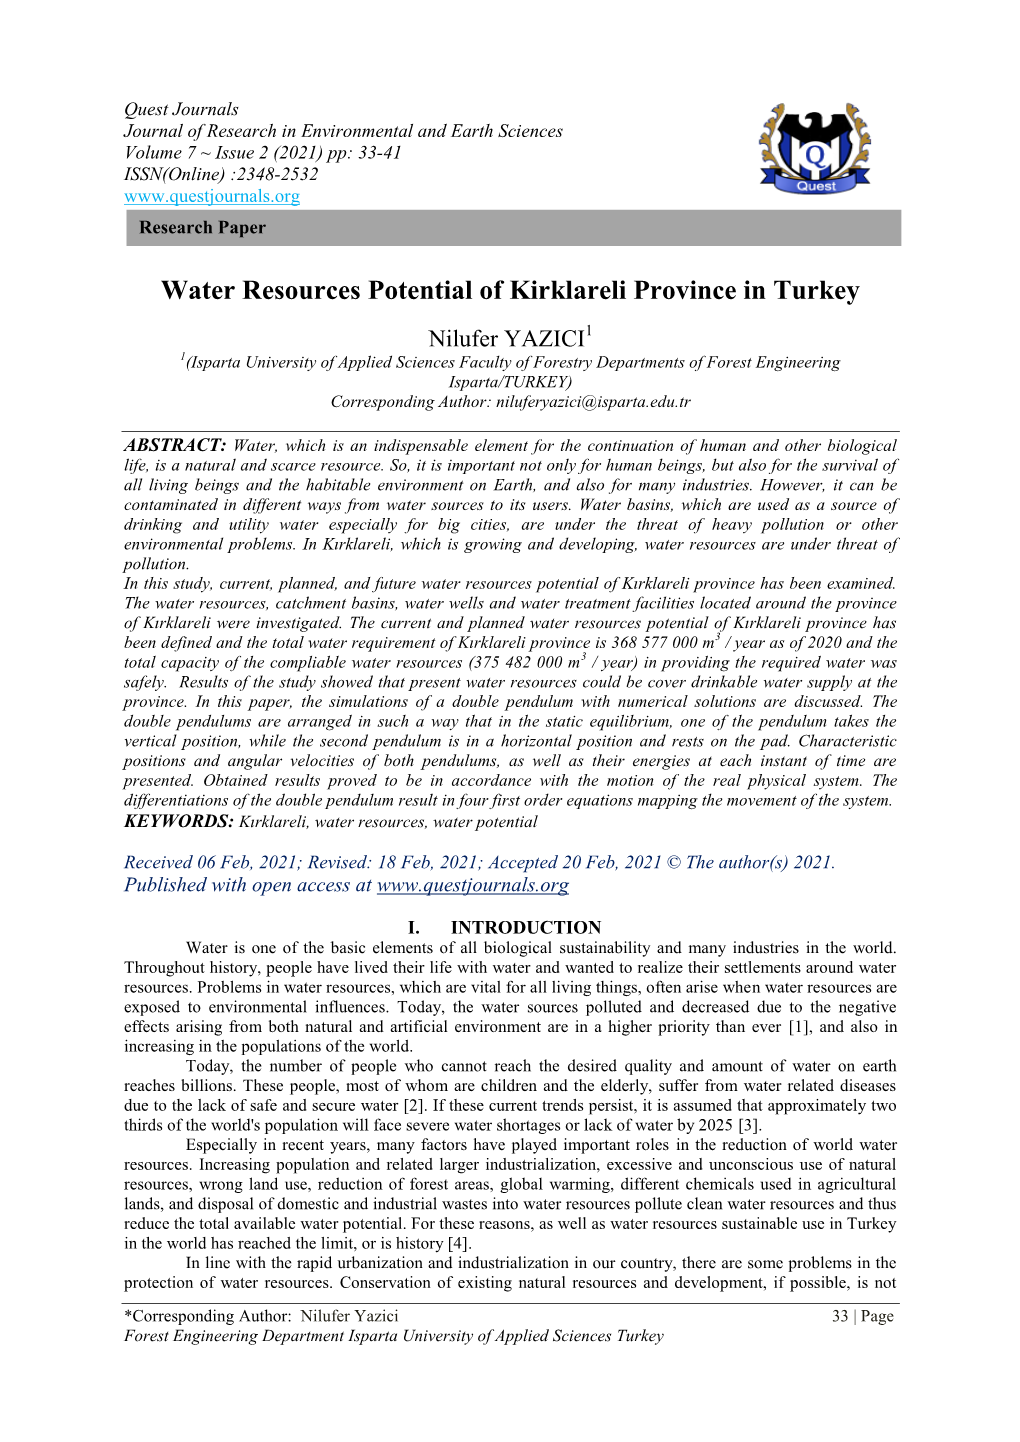 Water Resources Potential of Kirklareli Province in Turkey